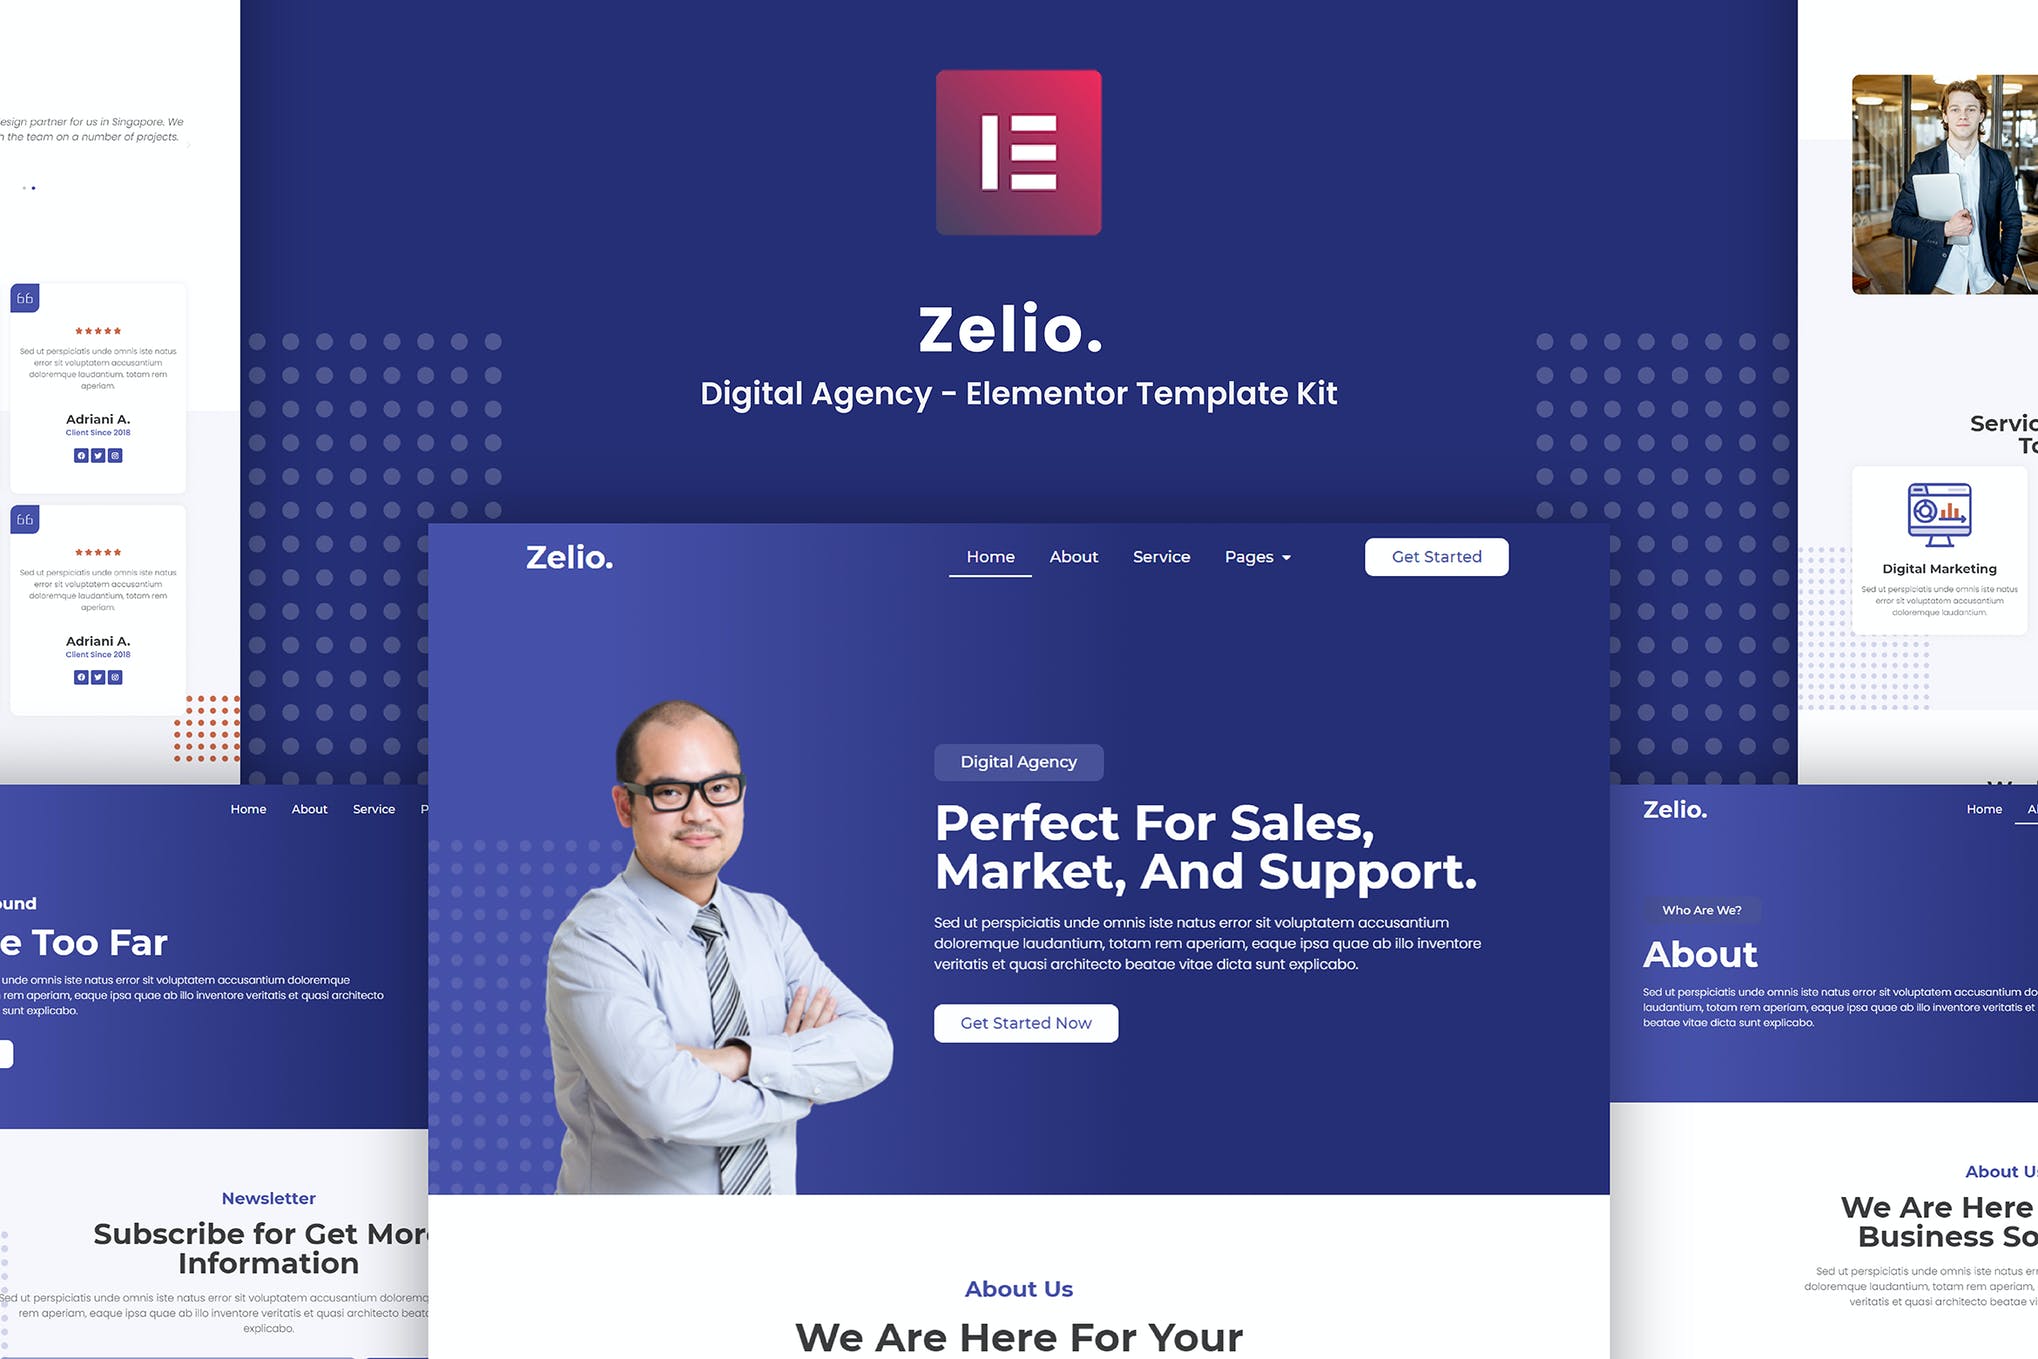 Zelio - Digital Agency Template Kit